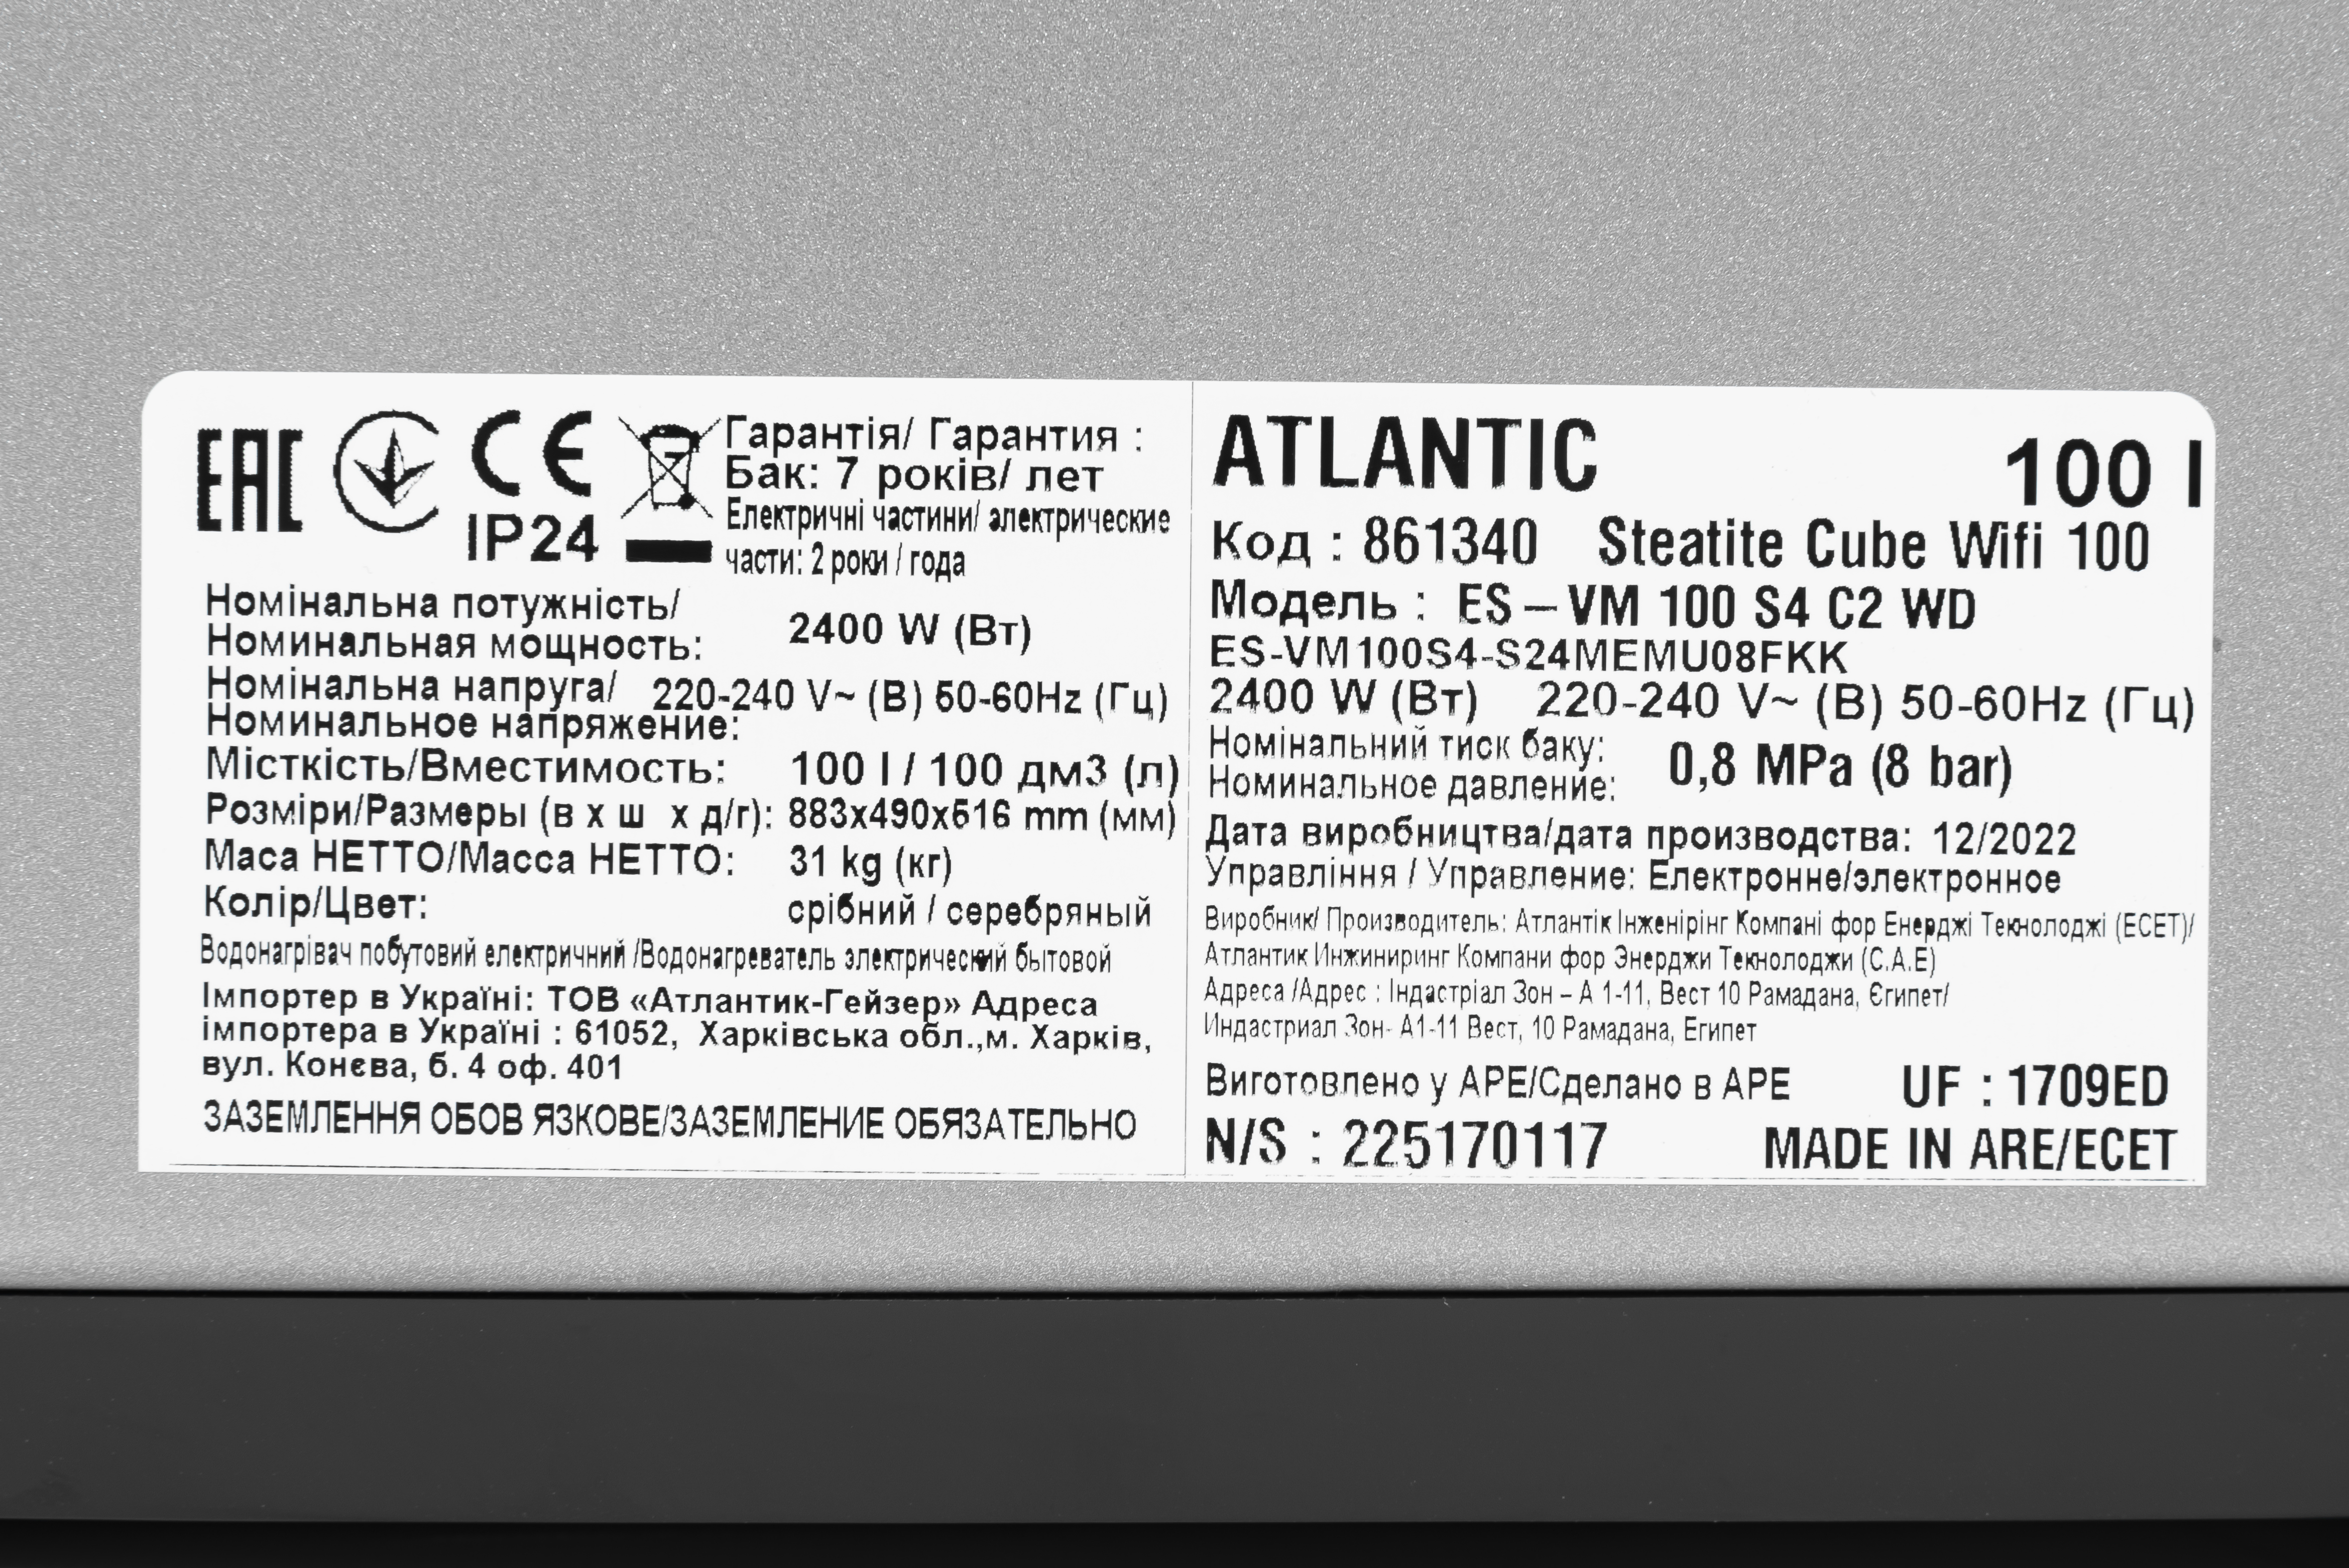 Бойлер Atlantic Steatite Cube WI-FI ES-VM 100 S4 C2 WD (2400W) silver отзывы - изображения 5